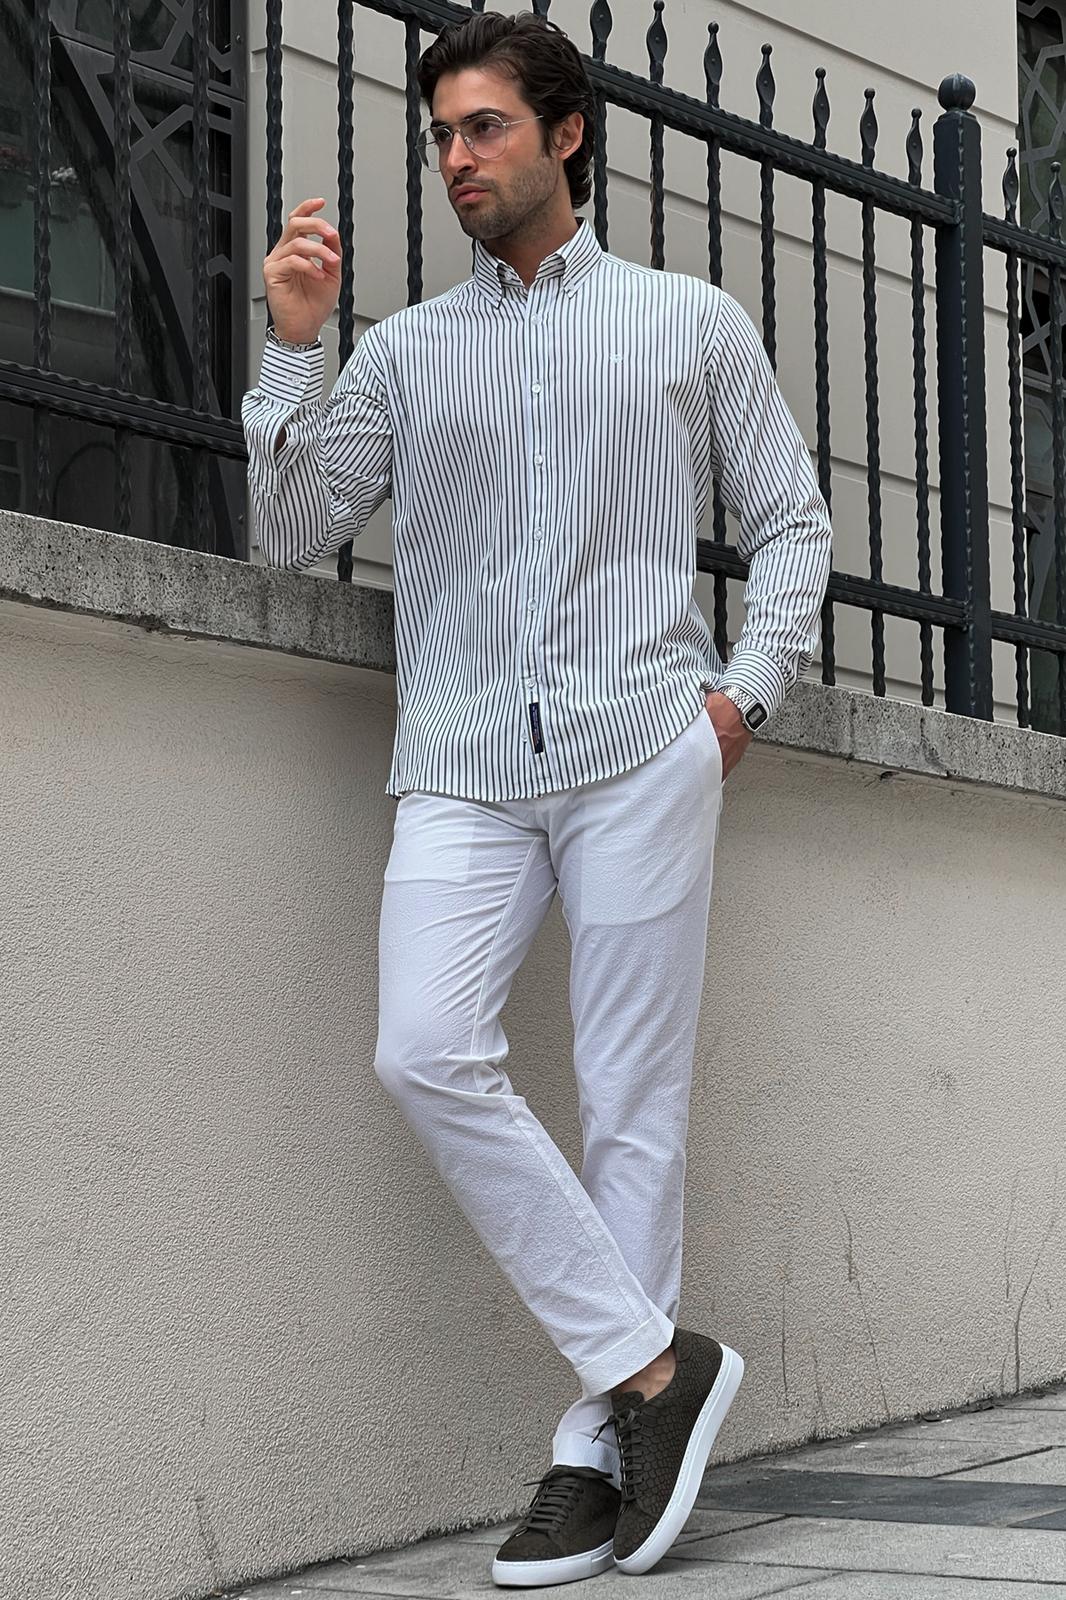 Daniel Striped White and Green Shirt